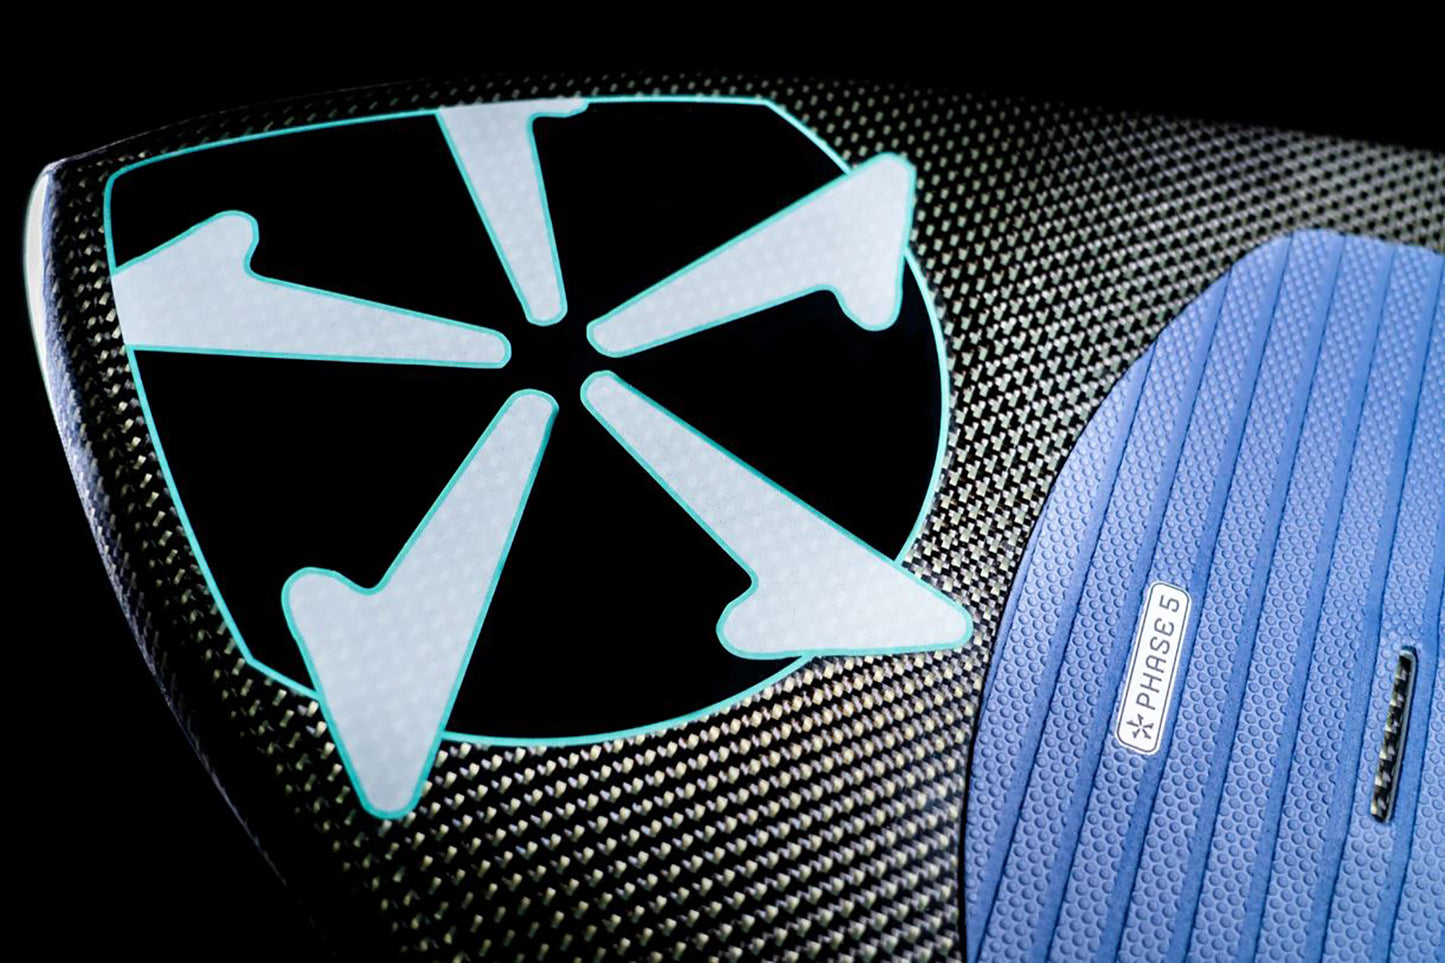 2022 Phase Five Model X Premium Skim Style Wake Surfboard